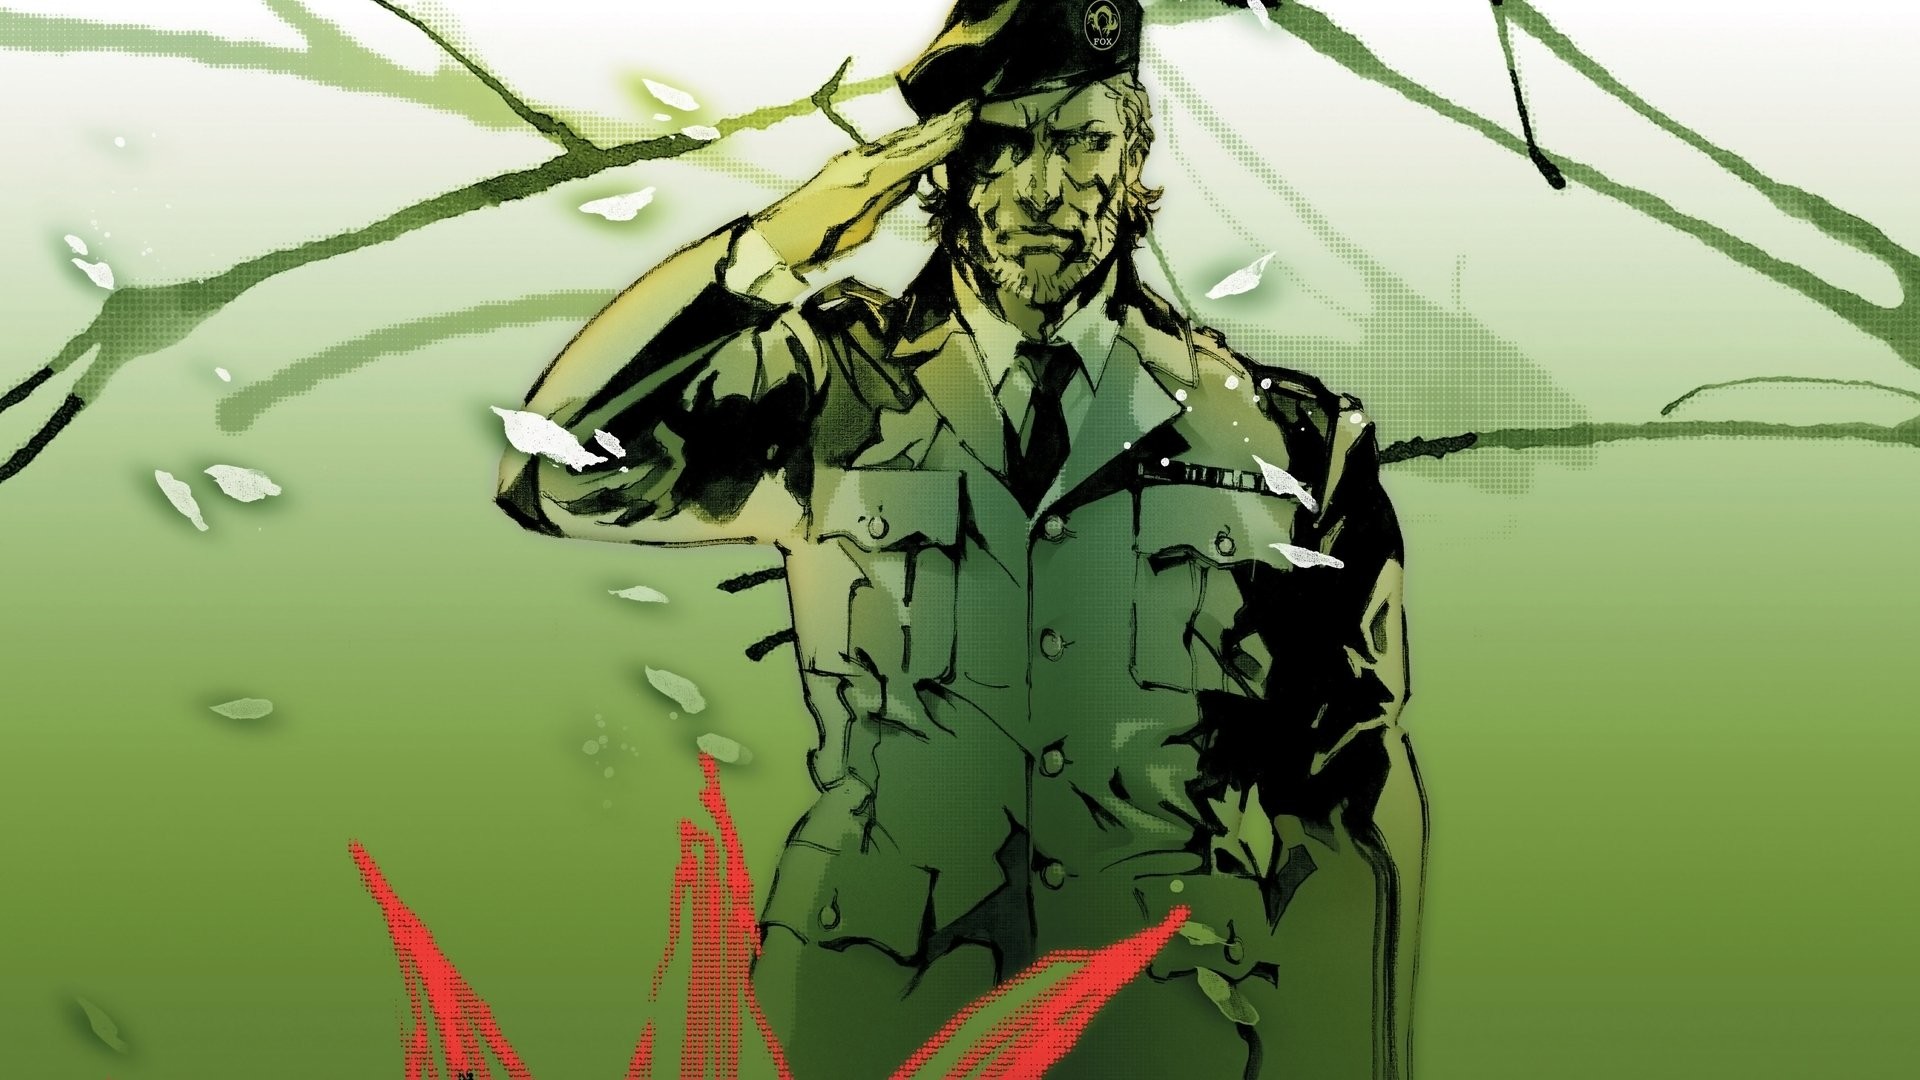 Metal Gear Solid 3 Wallpaper ① Wallpapertag